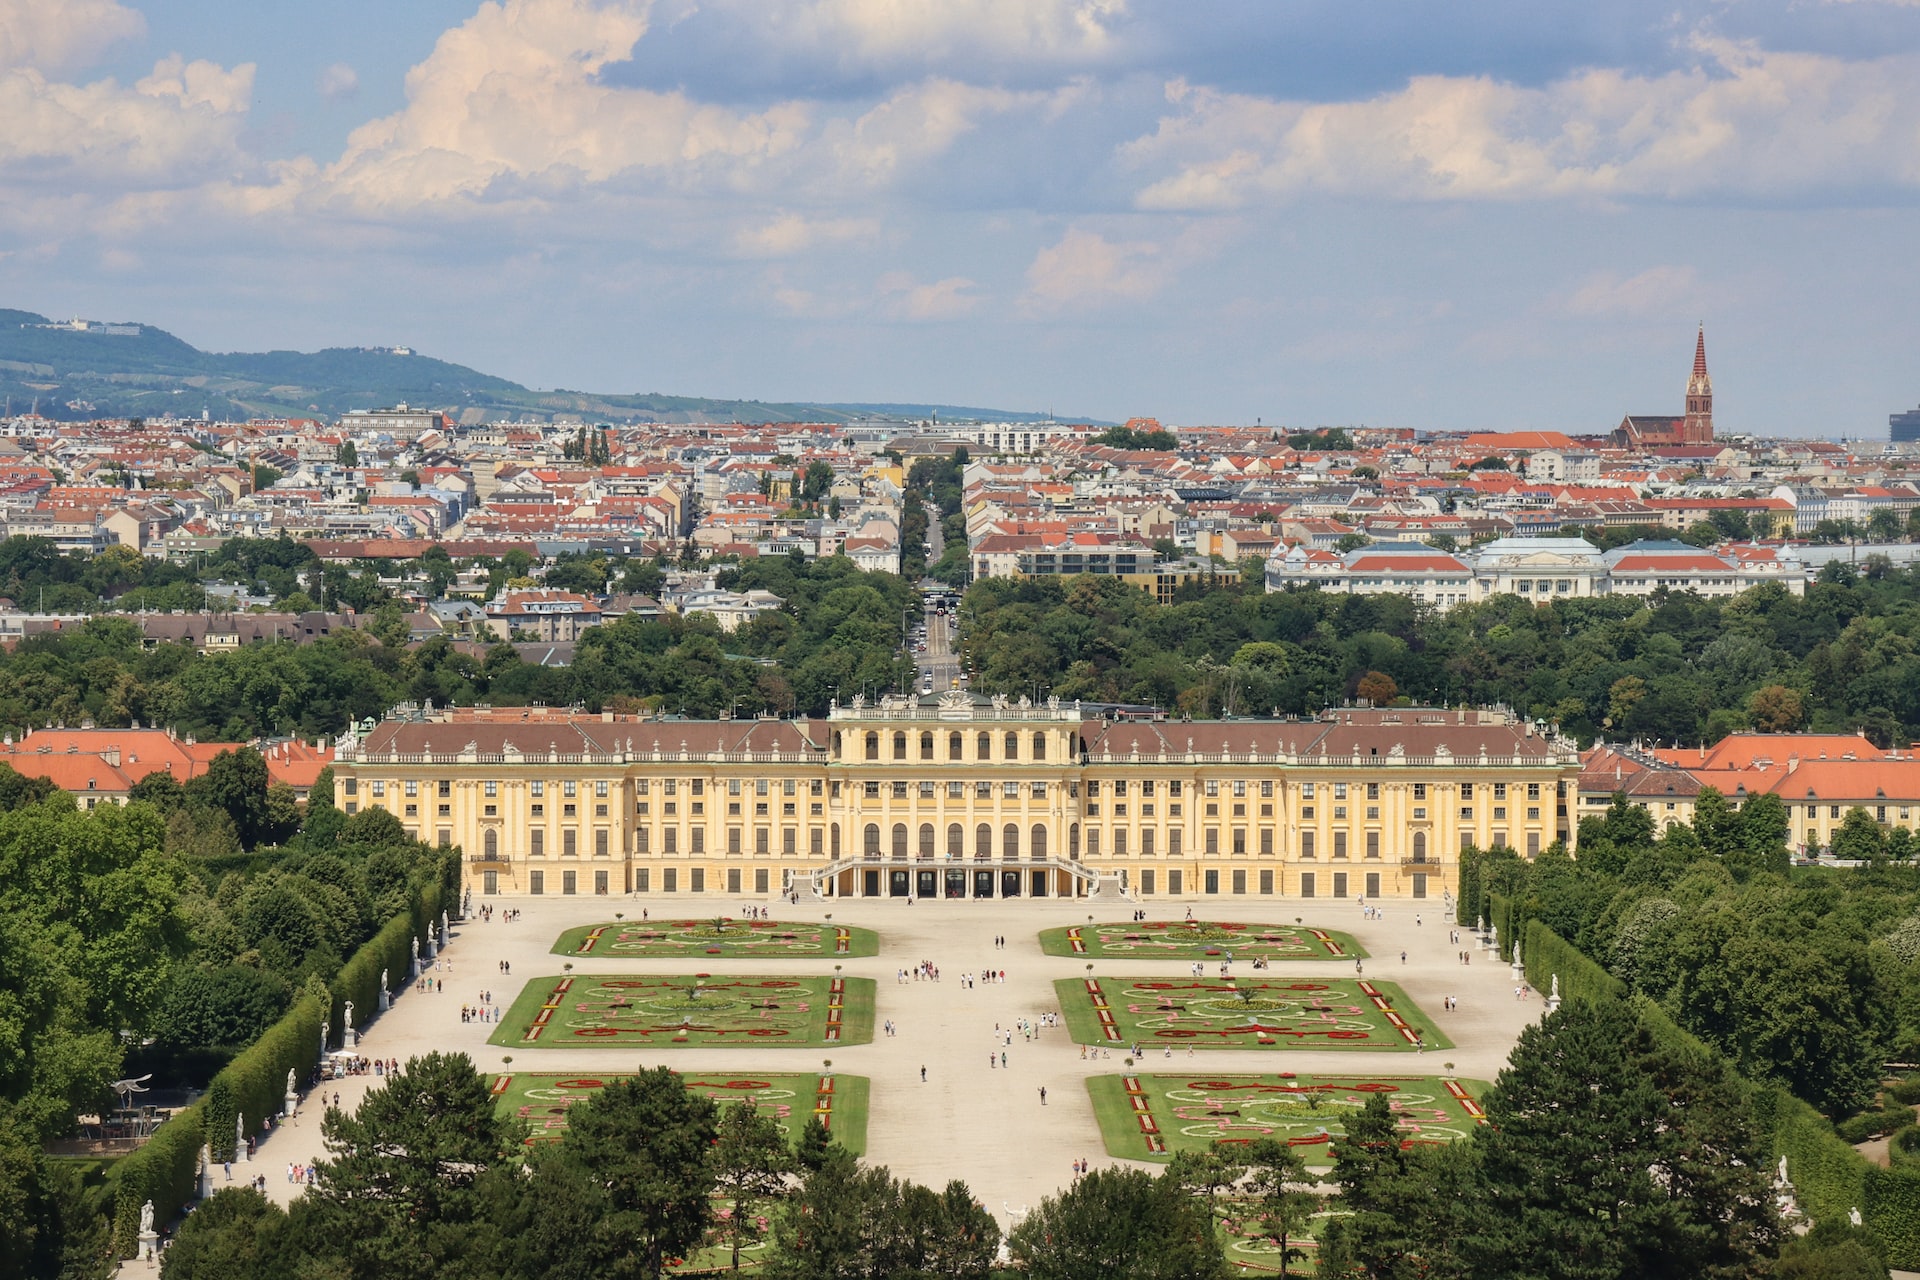 Schönbrunn Palace is probably Vienna's most famous landmark